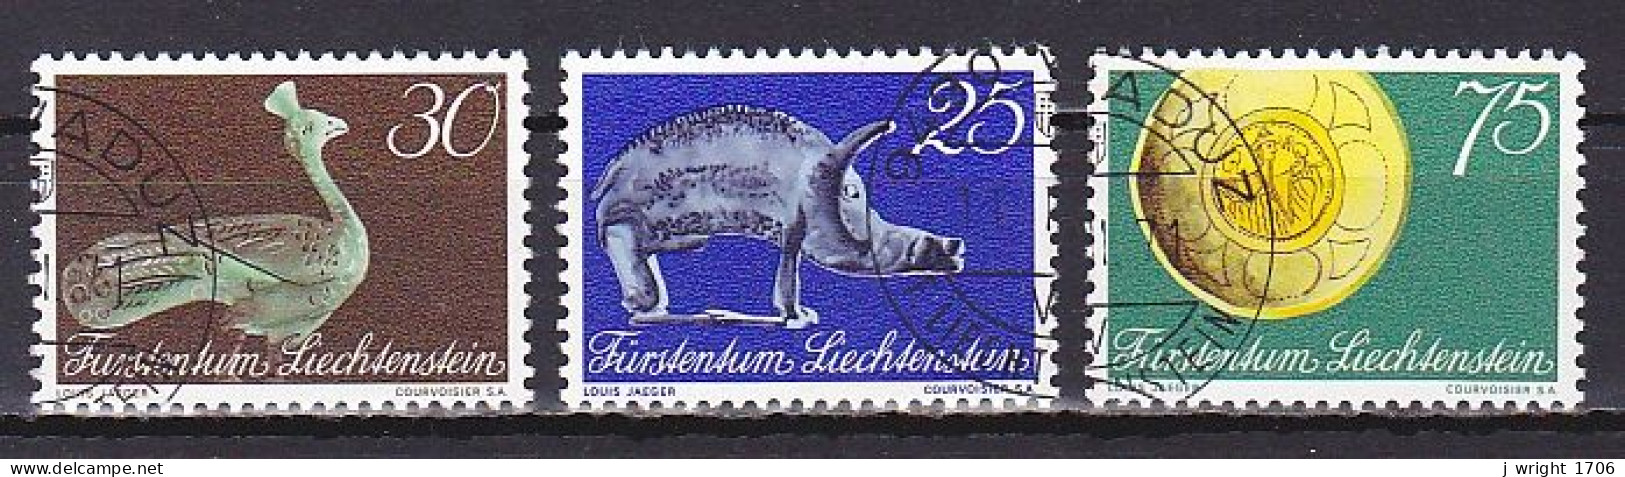 Liechtenstein, 1971, National Museum Inauguratuon, Set, CTO - Used Stamps